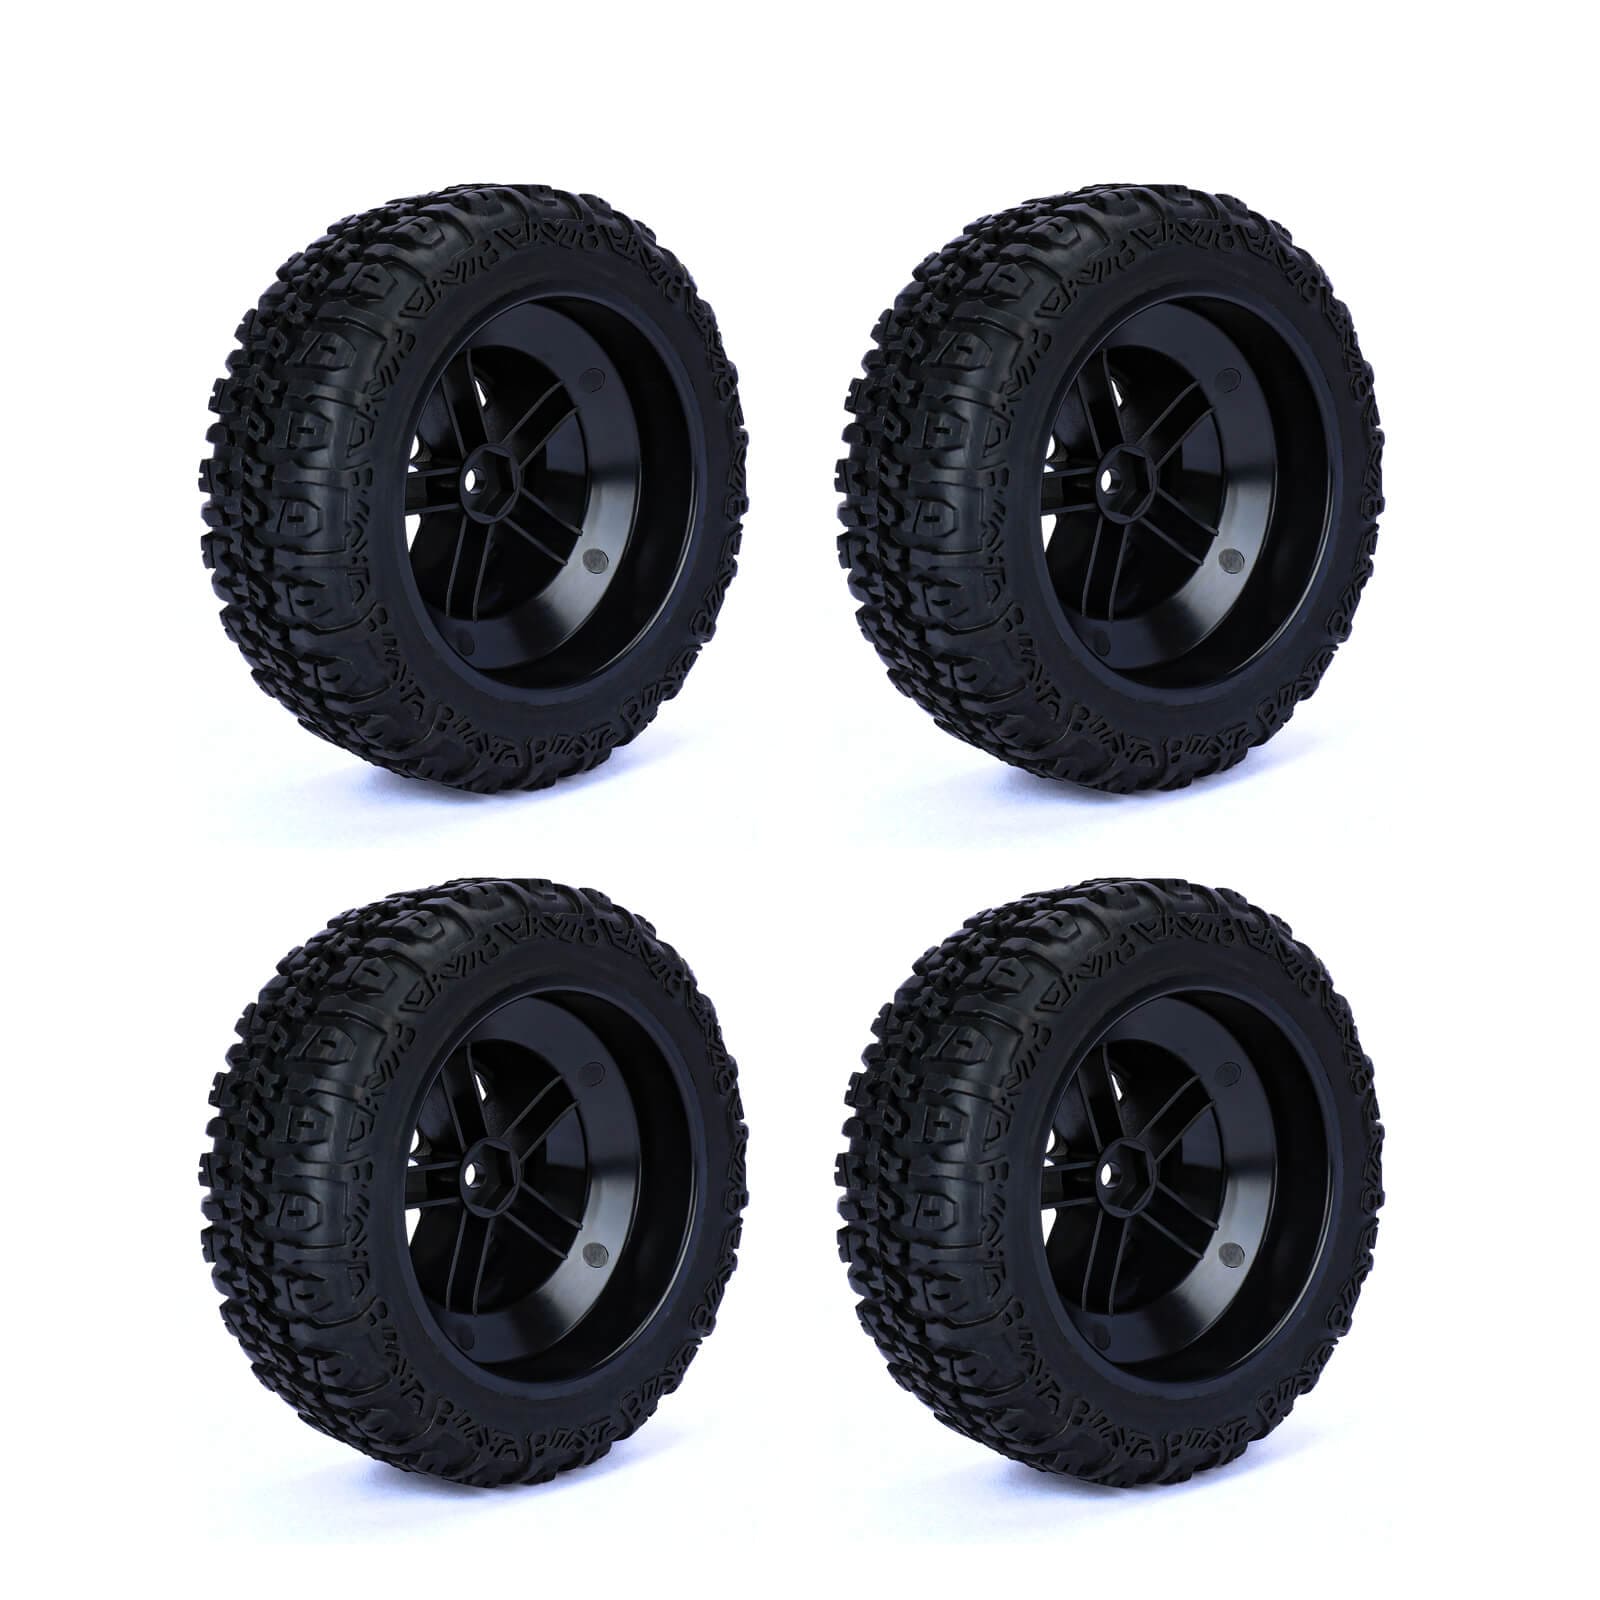 RCAWD Amazon RC Wheel & Tires 1/10 Pre-glued Monster Truck Wheel Tires LG-019BL LG-020BL